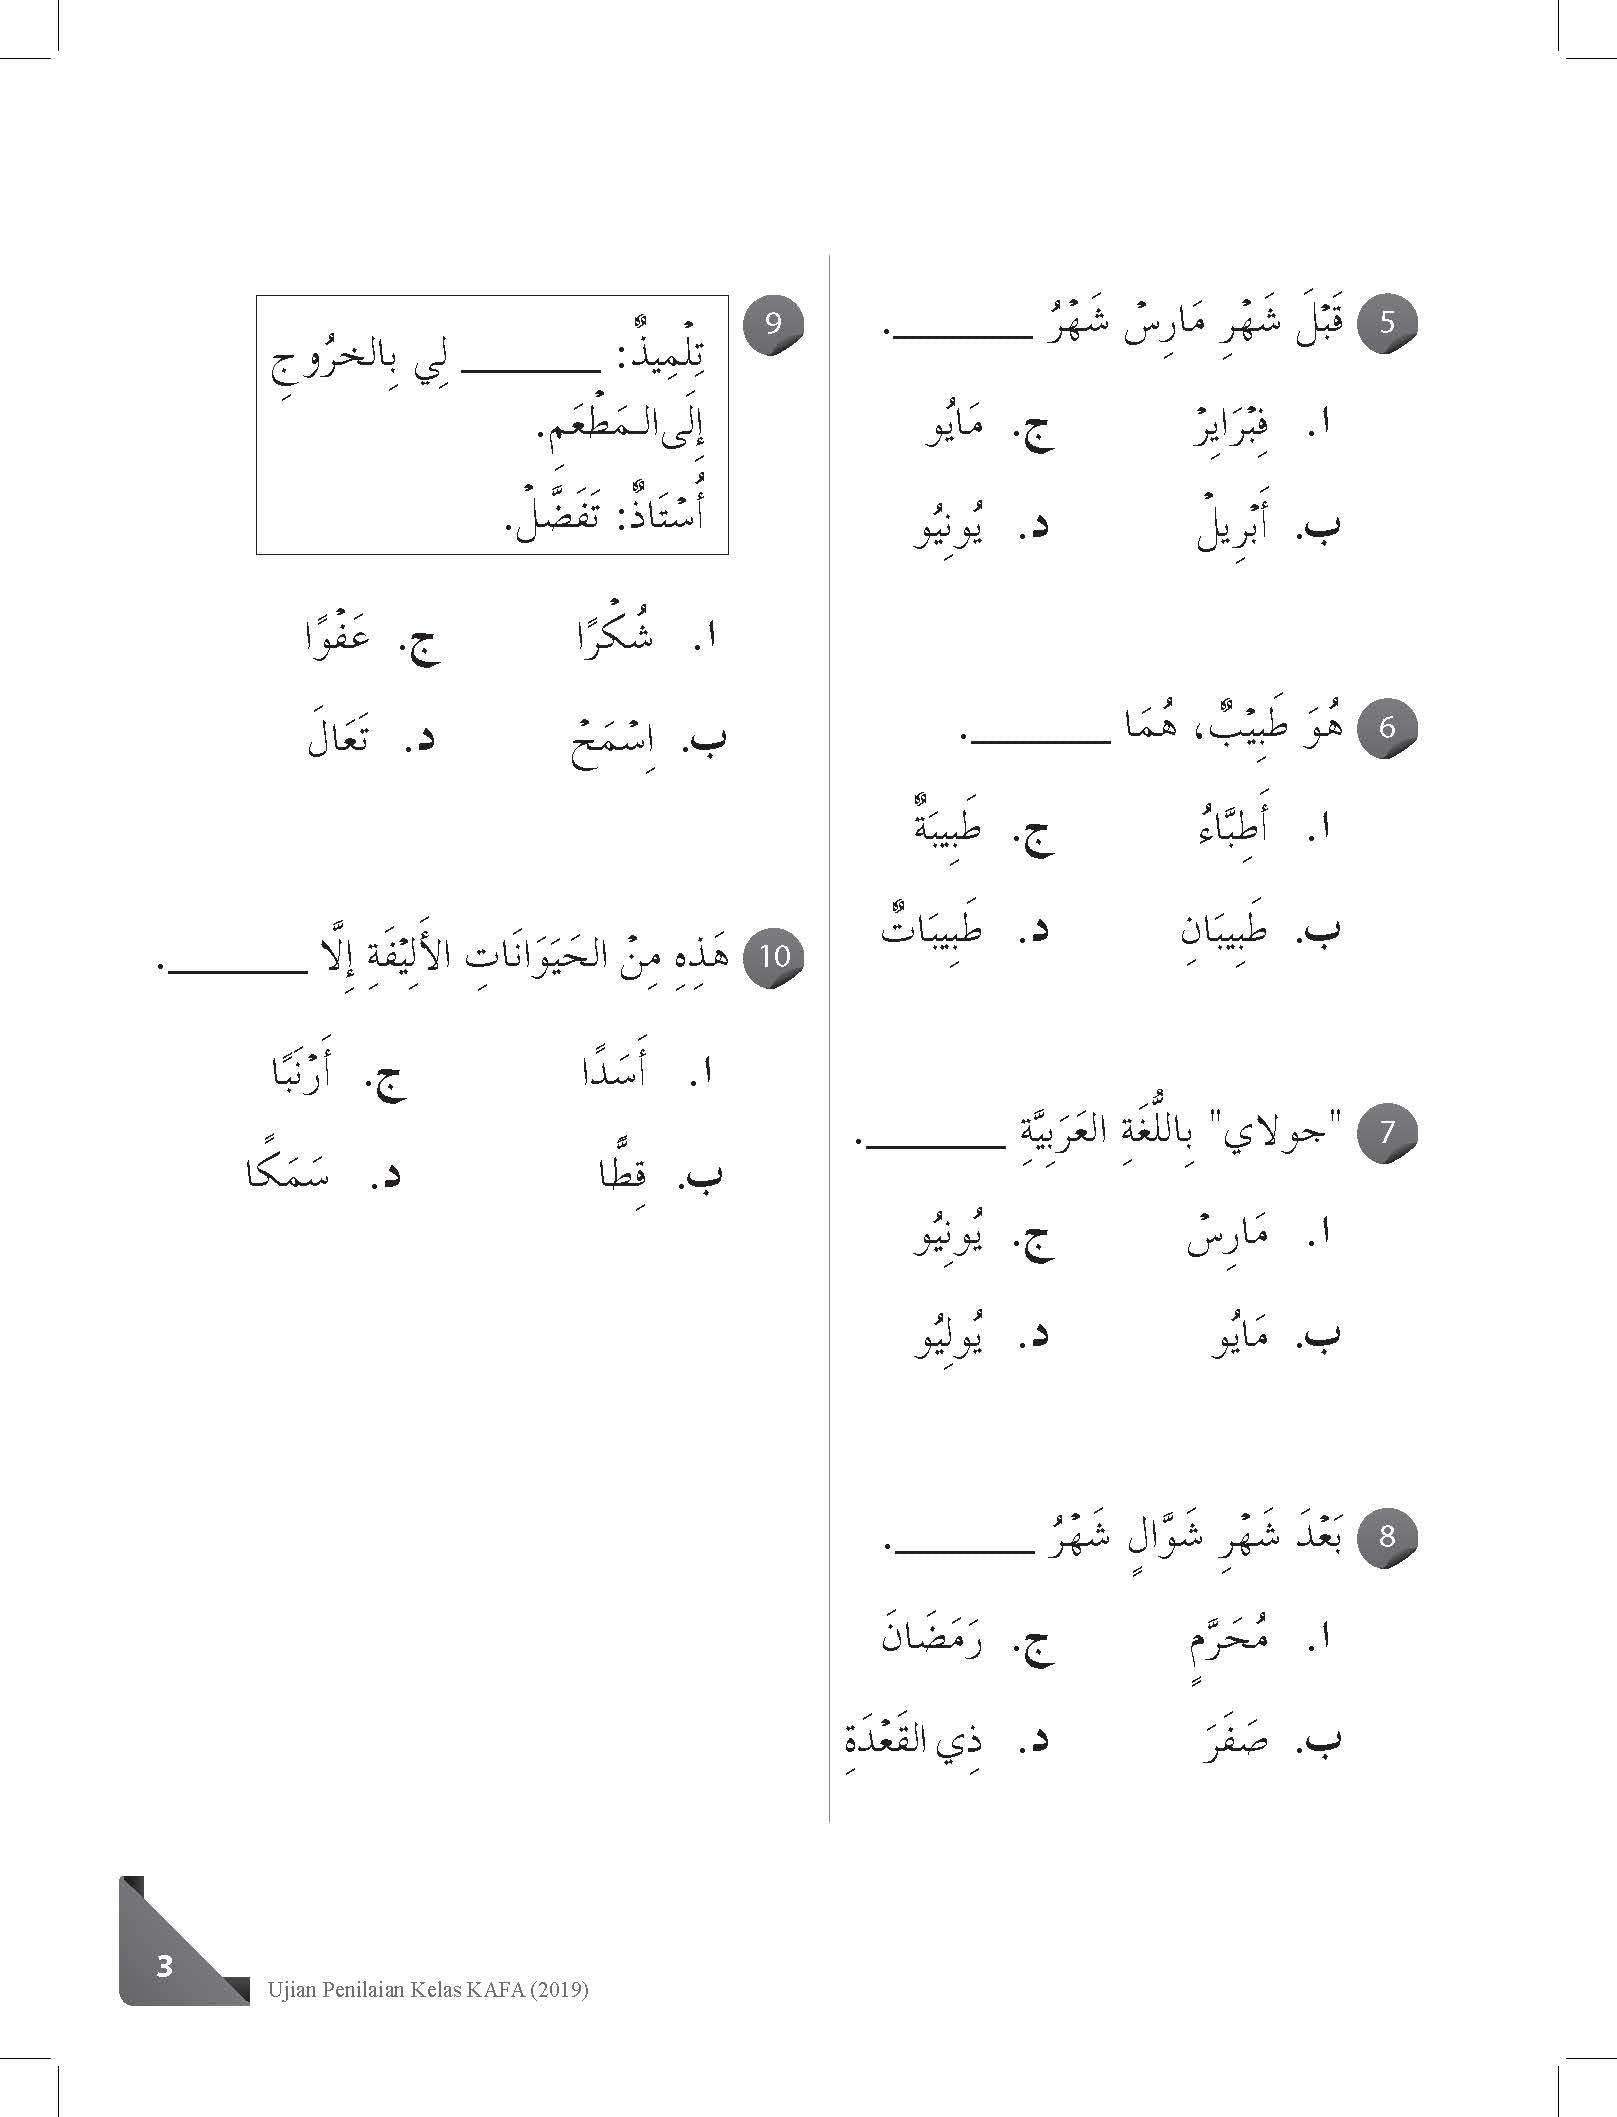 Conquer A+ Koleksi Soalan UPKK (Bahasa Arab) - (TBBS1318)